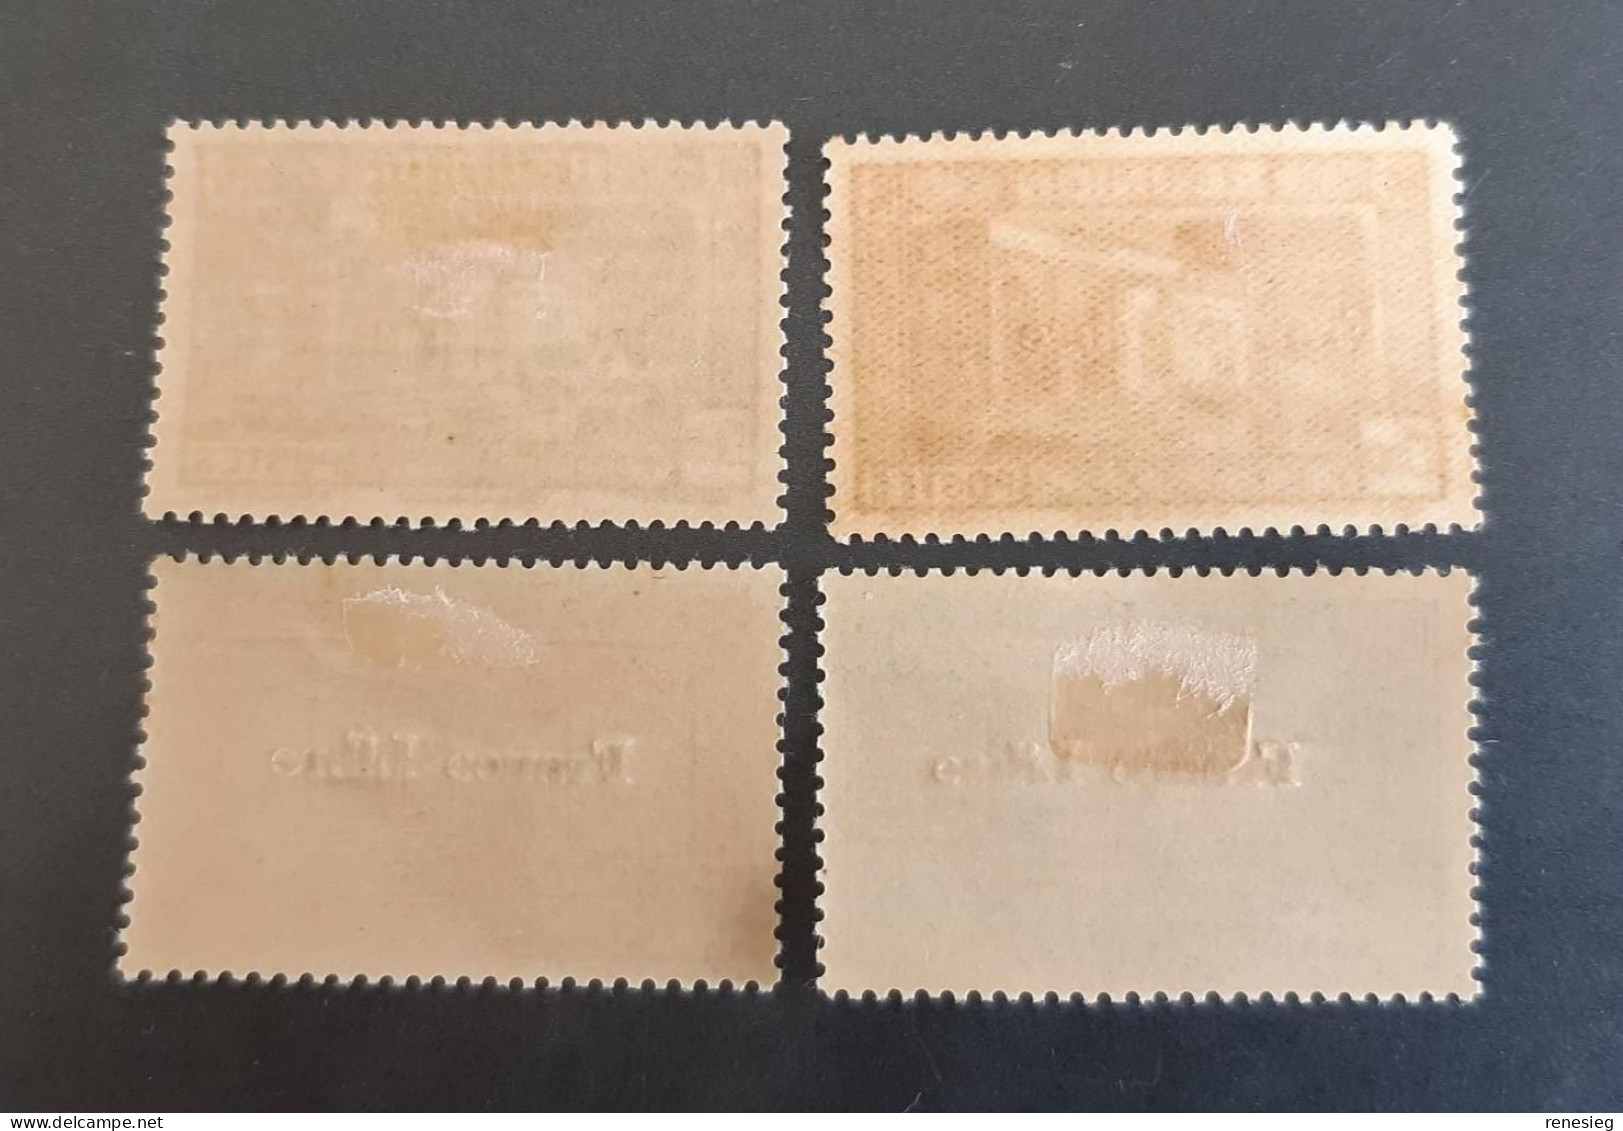 Réunion 1943 Yvert 207, 209, 211, 212 MH - Unused Stamps